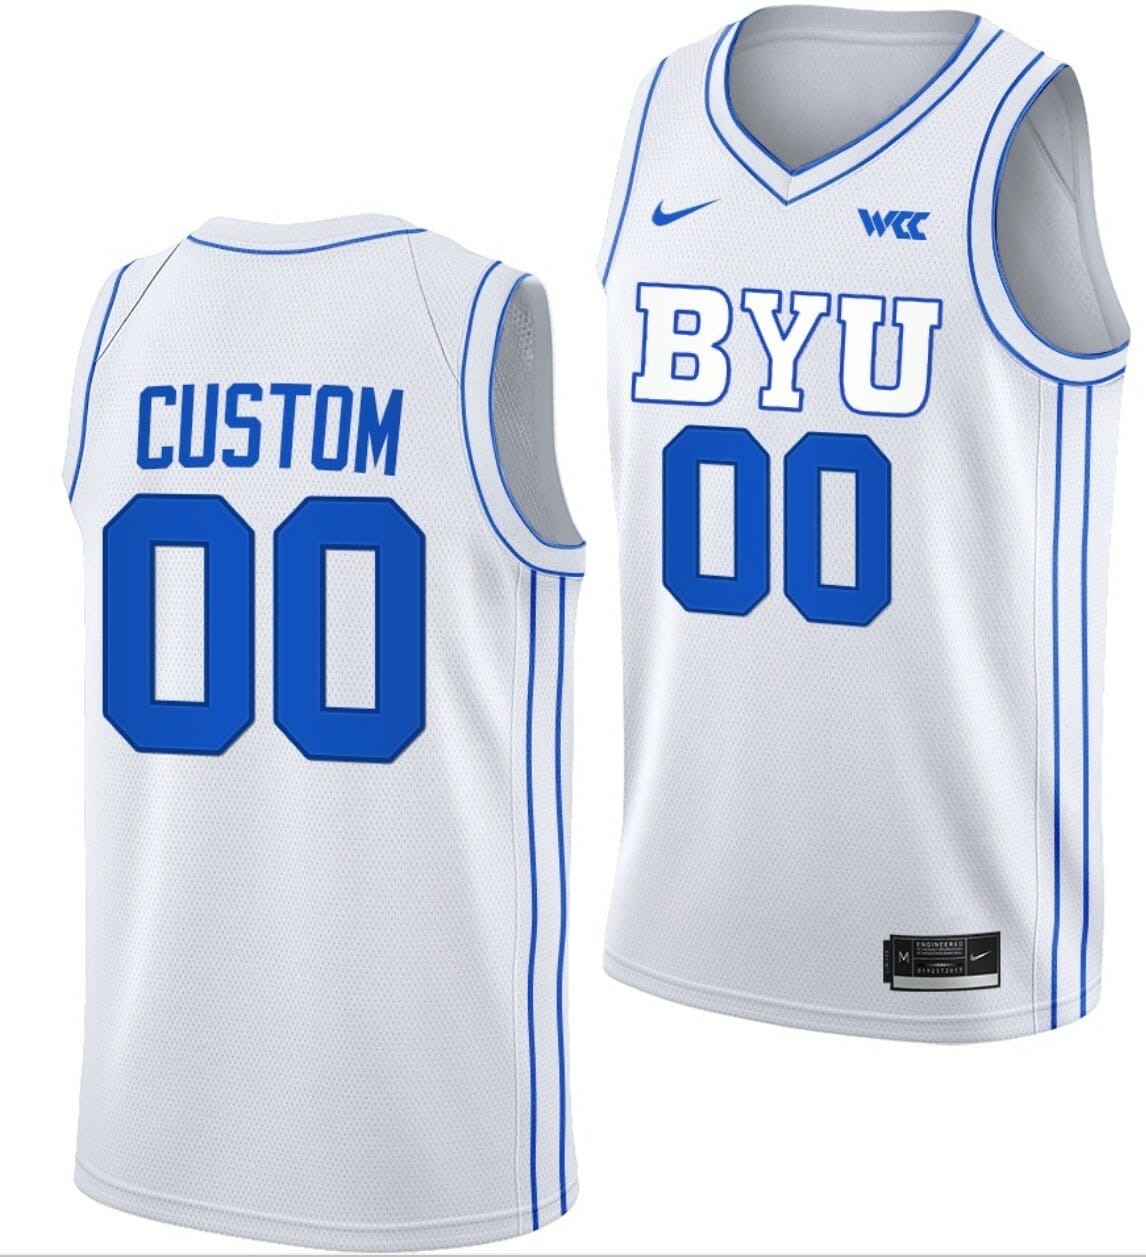 BYU Cougars football NCAA champions jersey